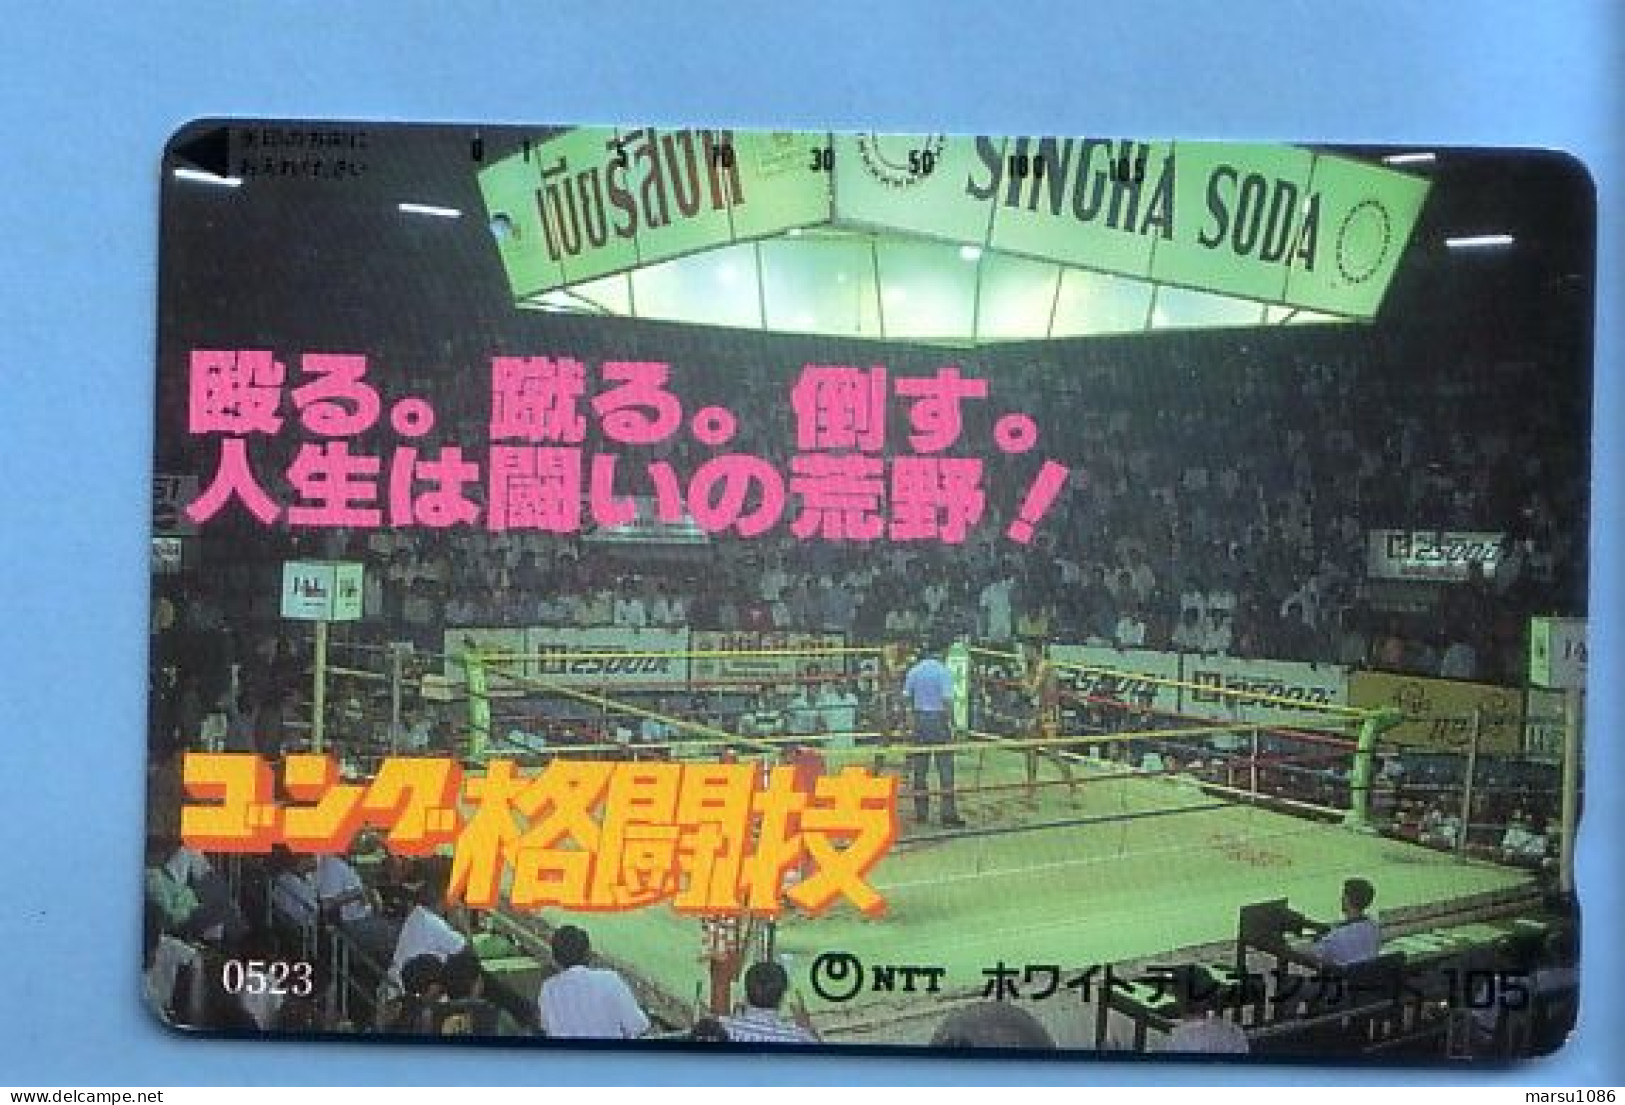 Japan Japon Telefonkarte Télécarte Phonecard Telefoonkaart -  Sport Wrestling Ringen - Sport